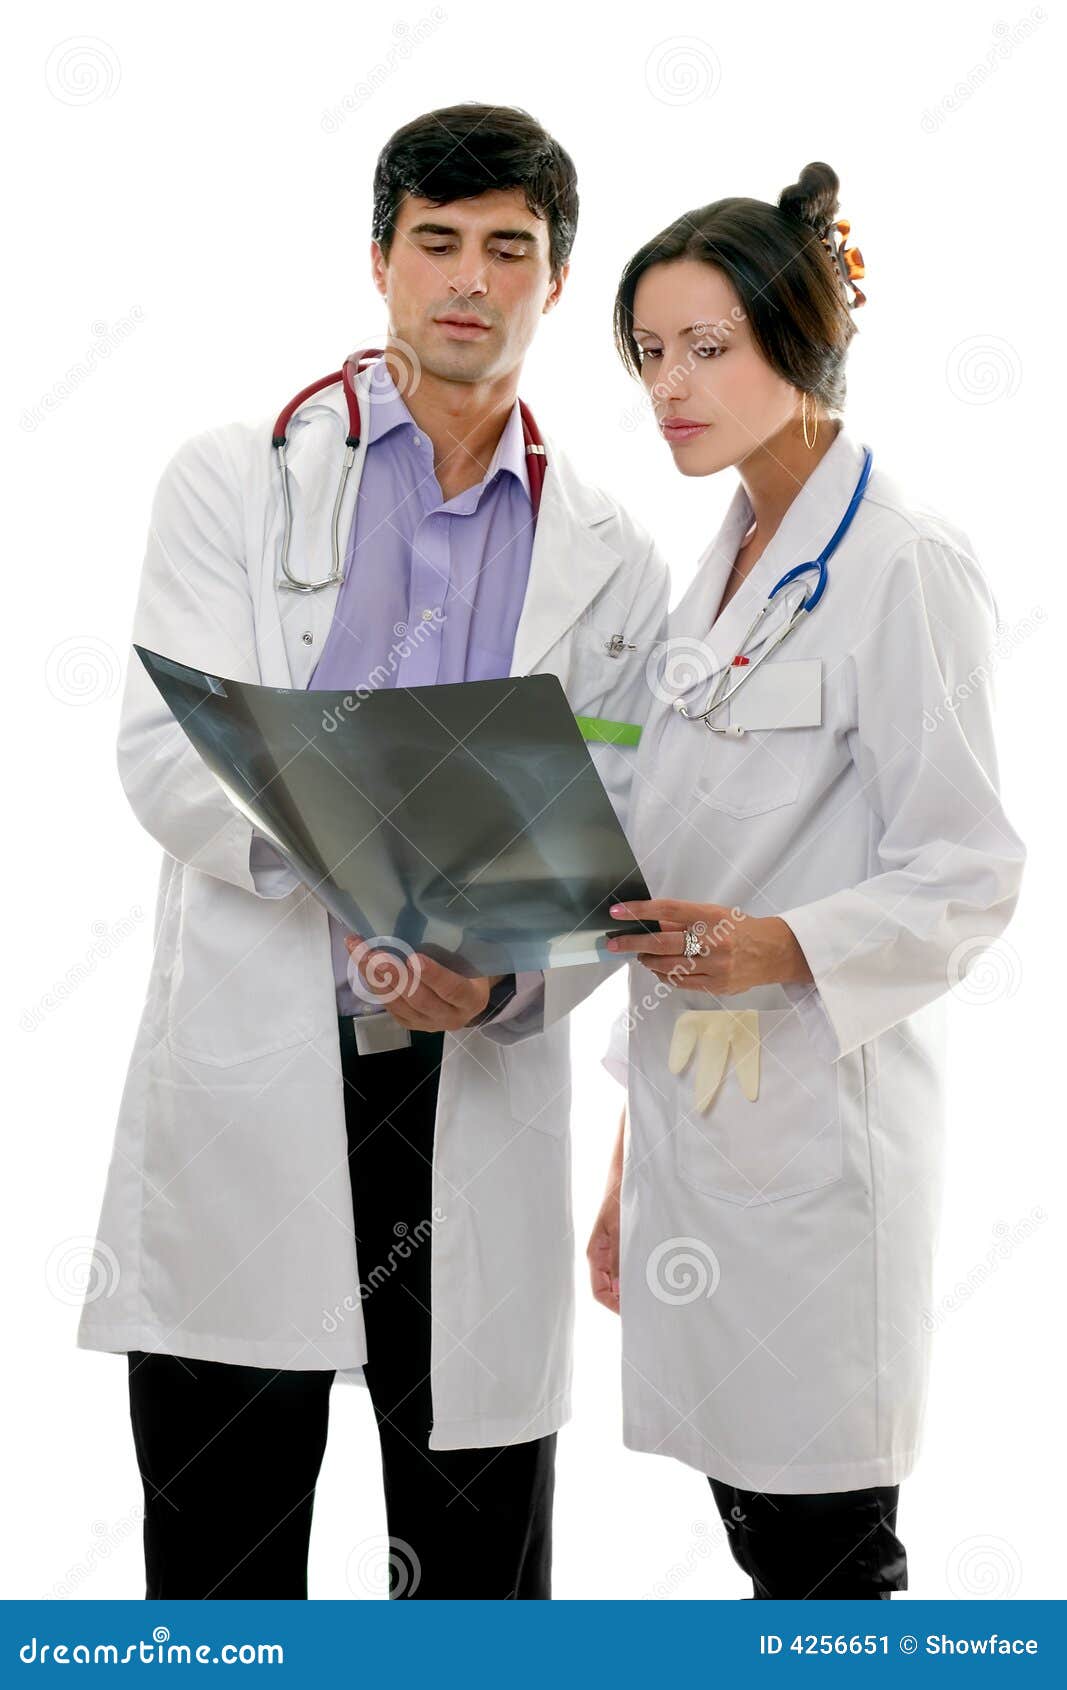 doctors discuss patient x-ray